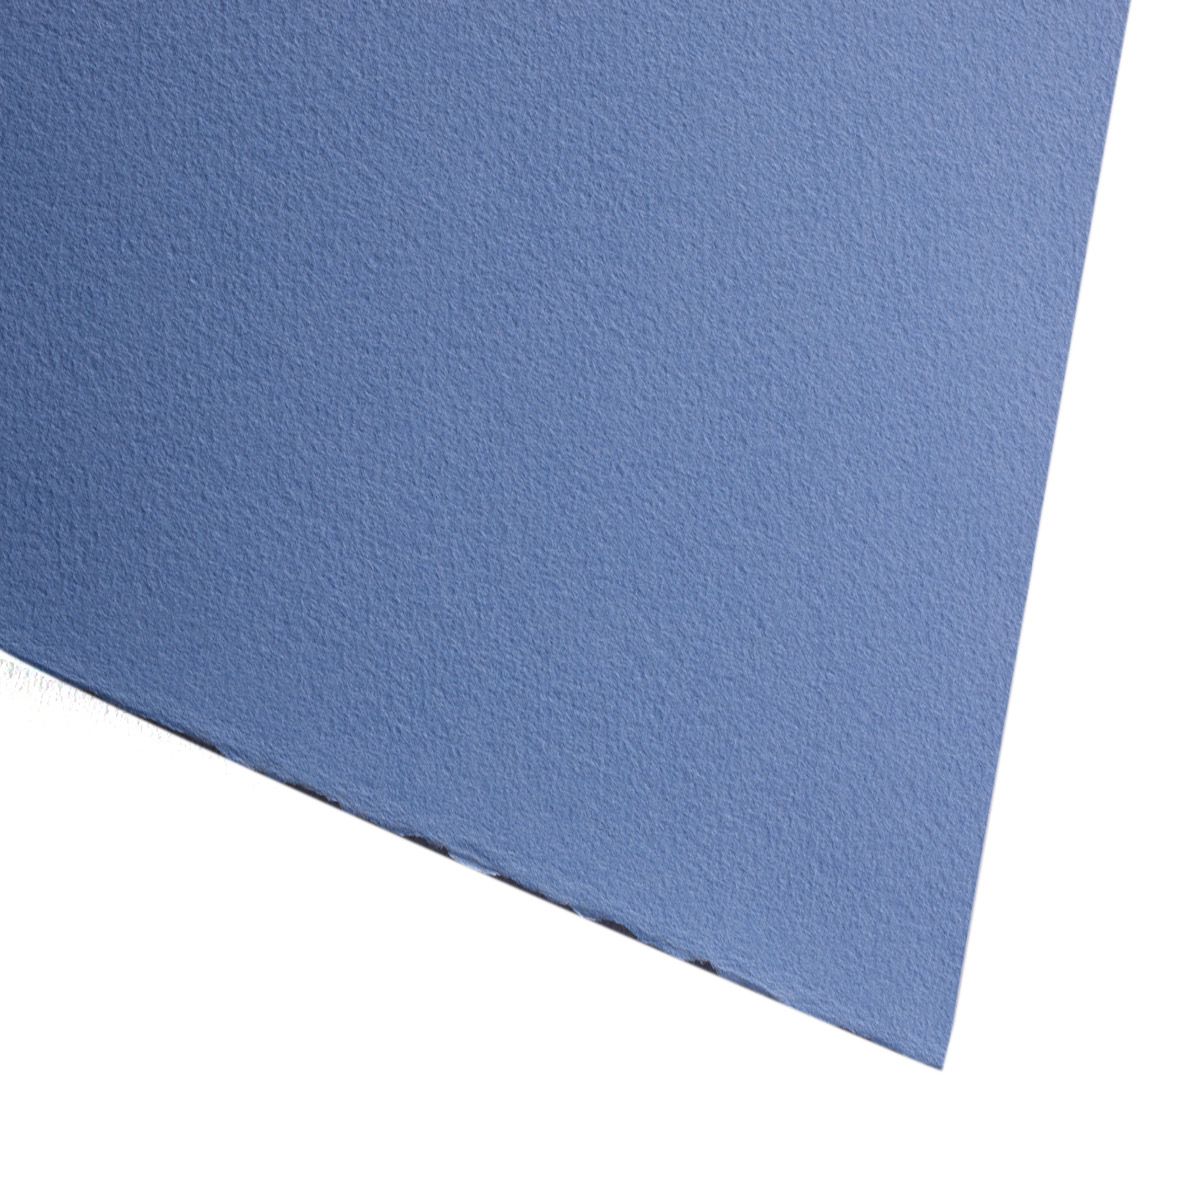 Fabriano Cromia Paper Sheet Light Blue 19.6" x 25.5"